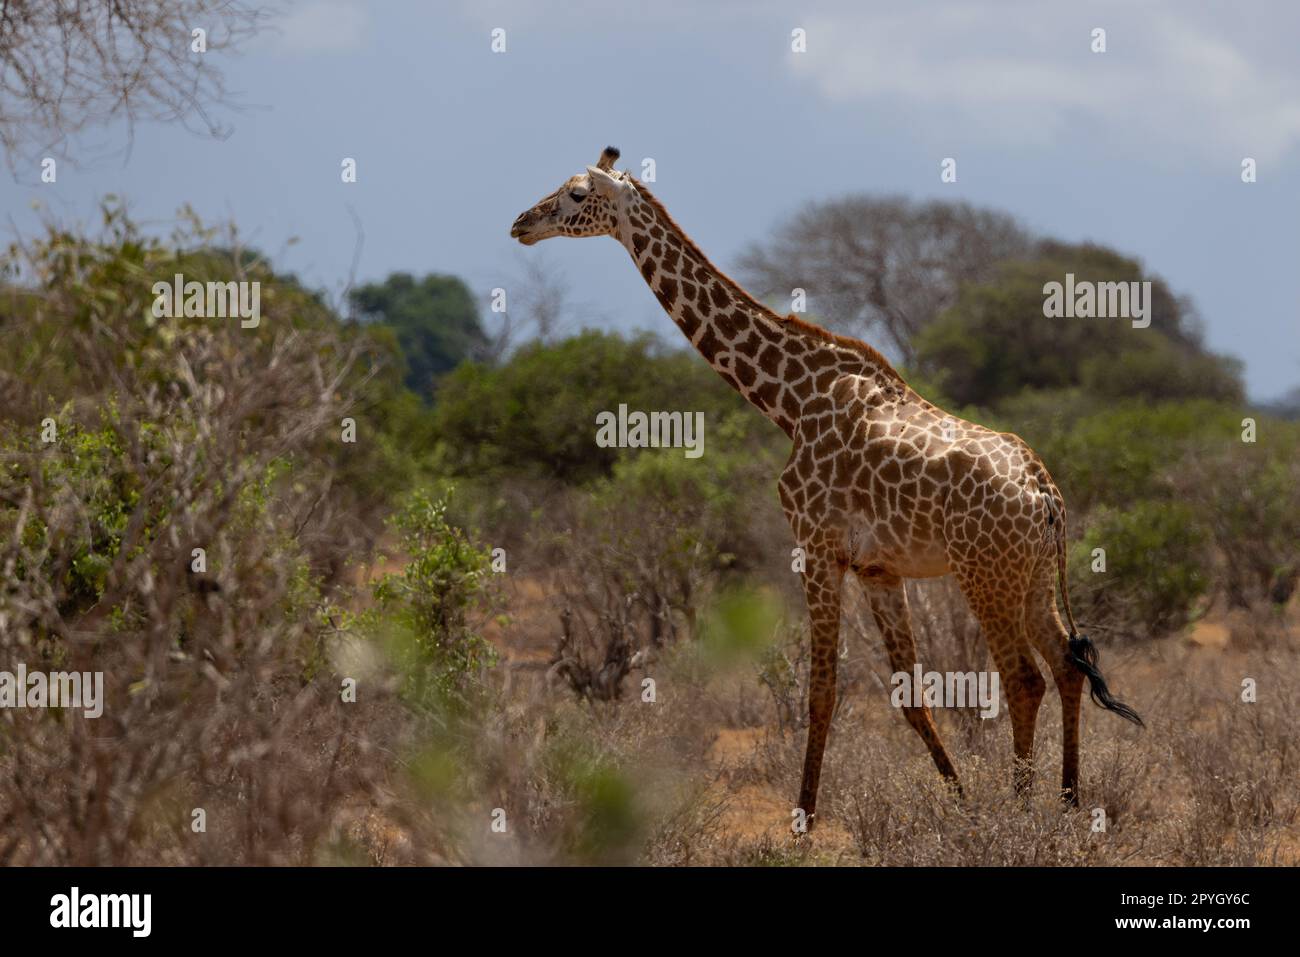 This stunning photo captures the giraffe in full motion as it runs across the open savannah of the Kenyan Tsavo East reserve. The giraffe's long legs Stock Photo